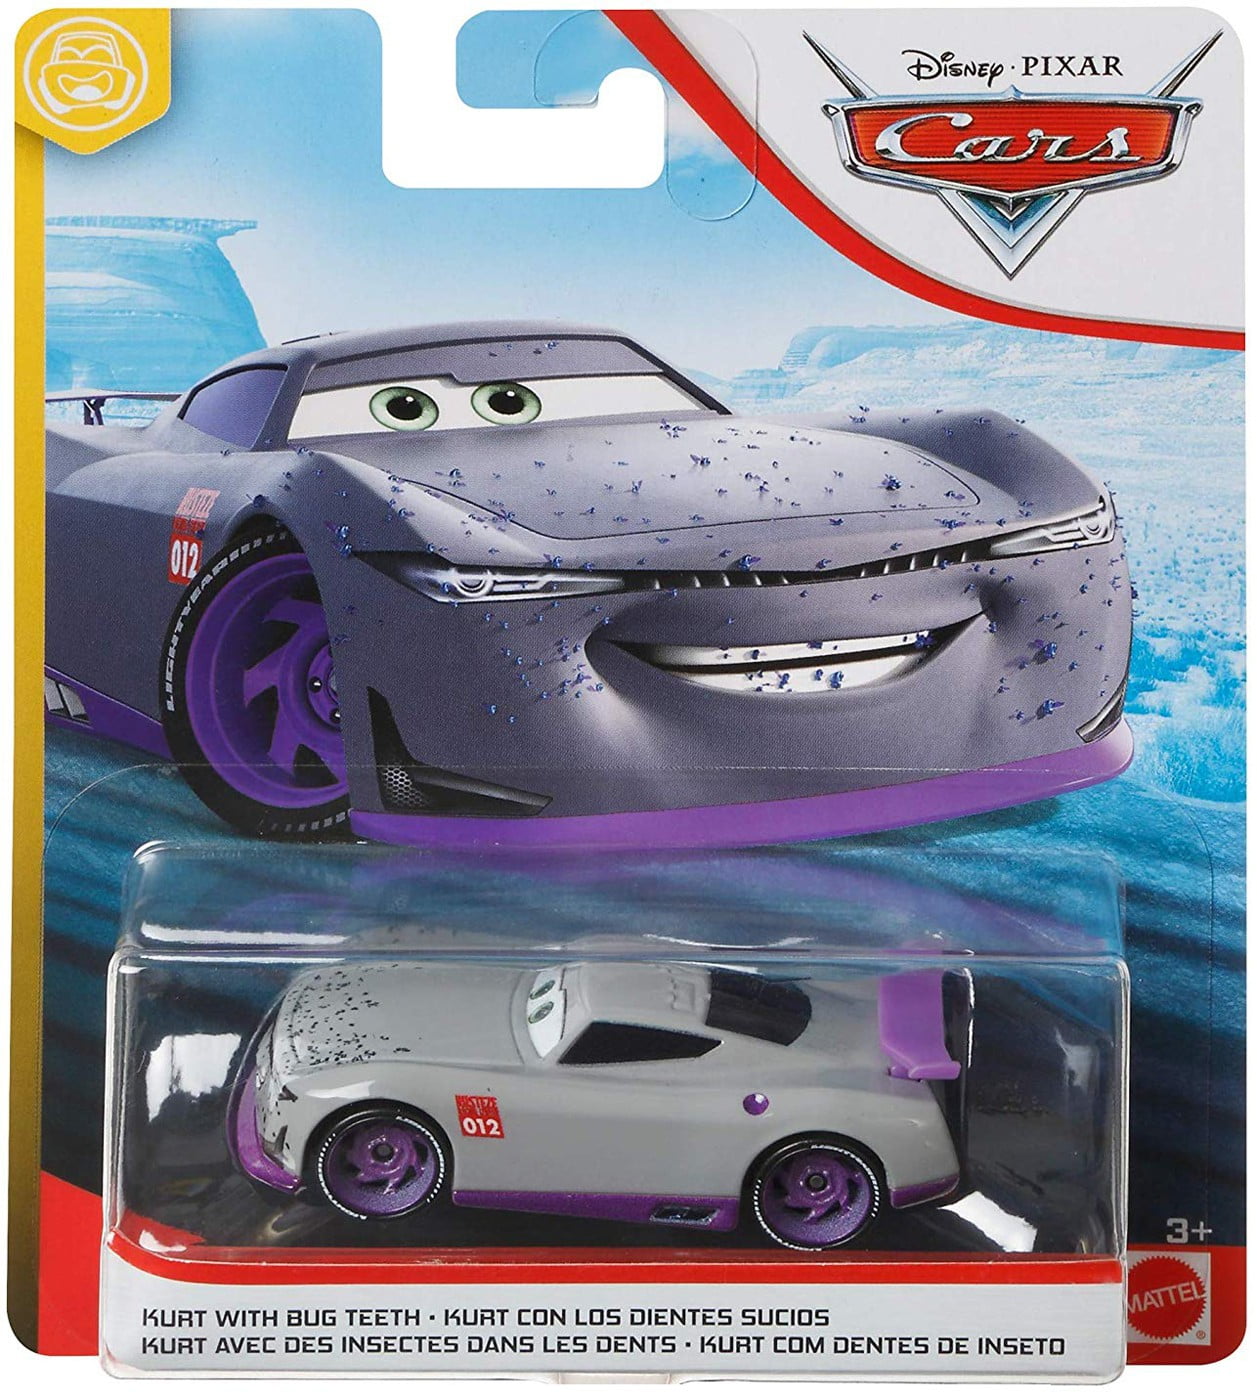 Disney Pixar Cars Piston Cup Racers  "NEXT-GEN"  Series 1:55 Diecast Metal Toy 